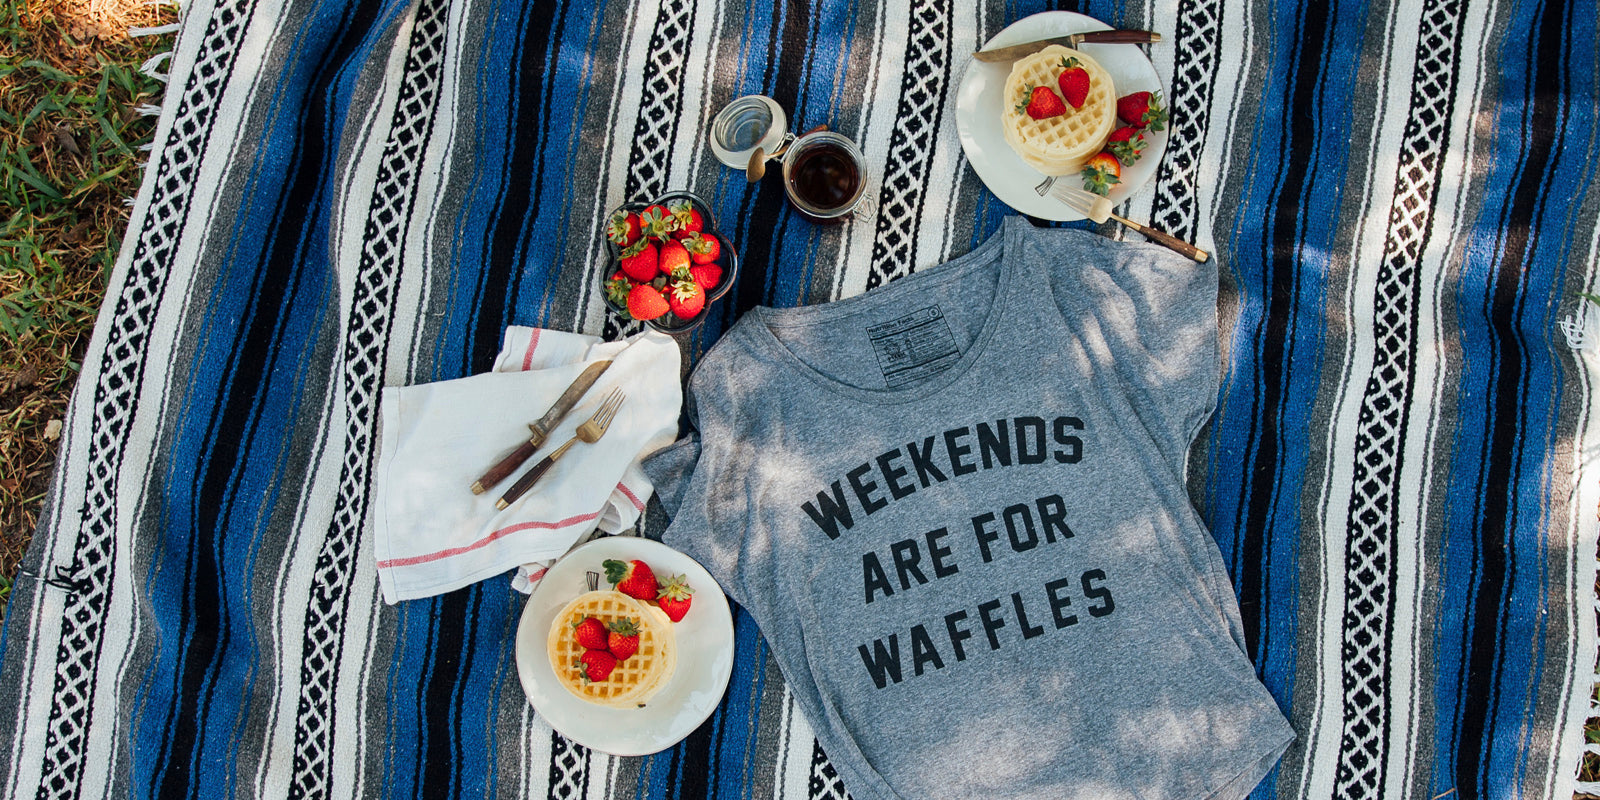 Original Weekends are for Waffles Women's Vintage Slouch Dolman T-shirt Tee for Breakfast Brunch Foodie Food Lovers